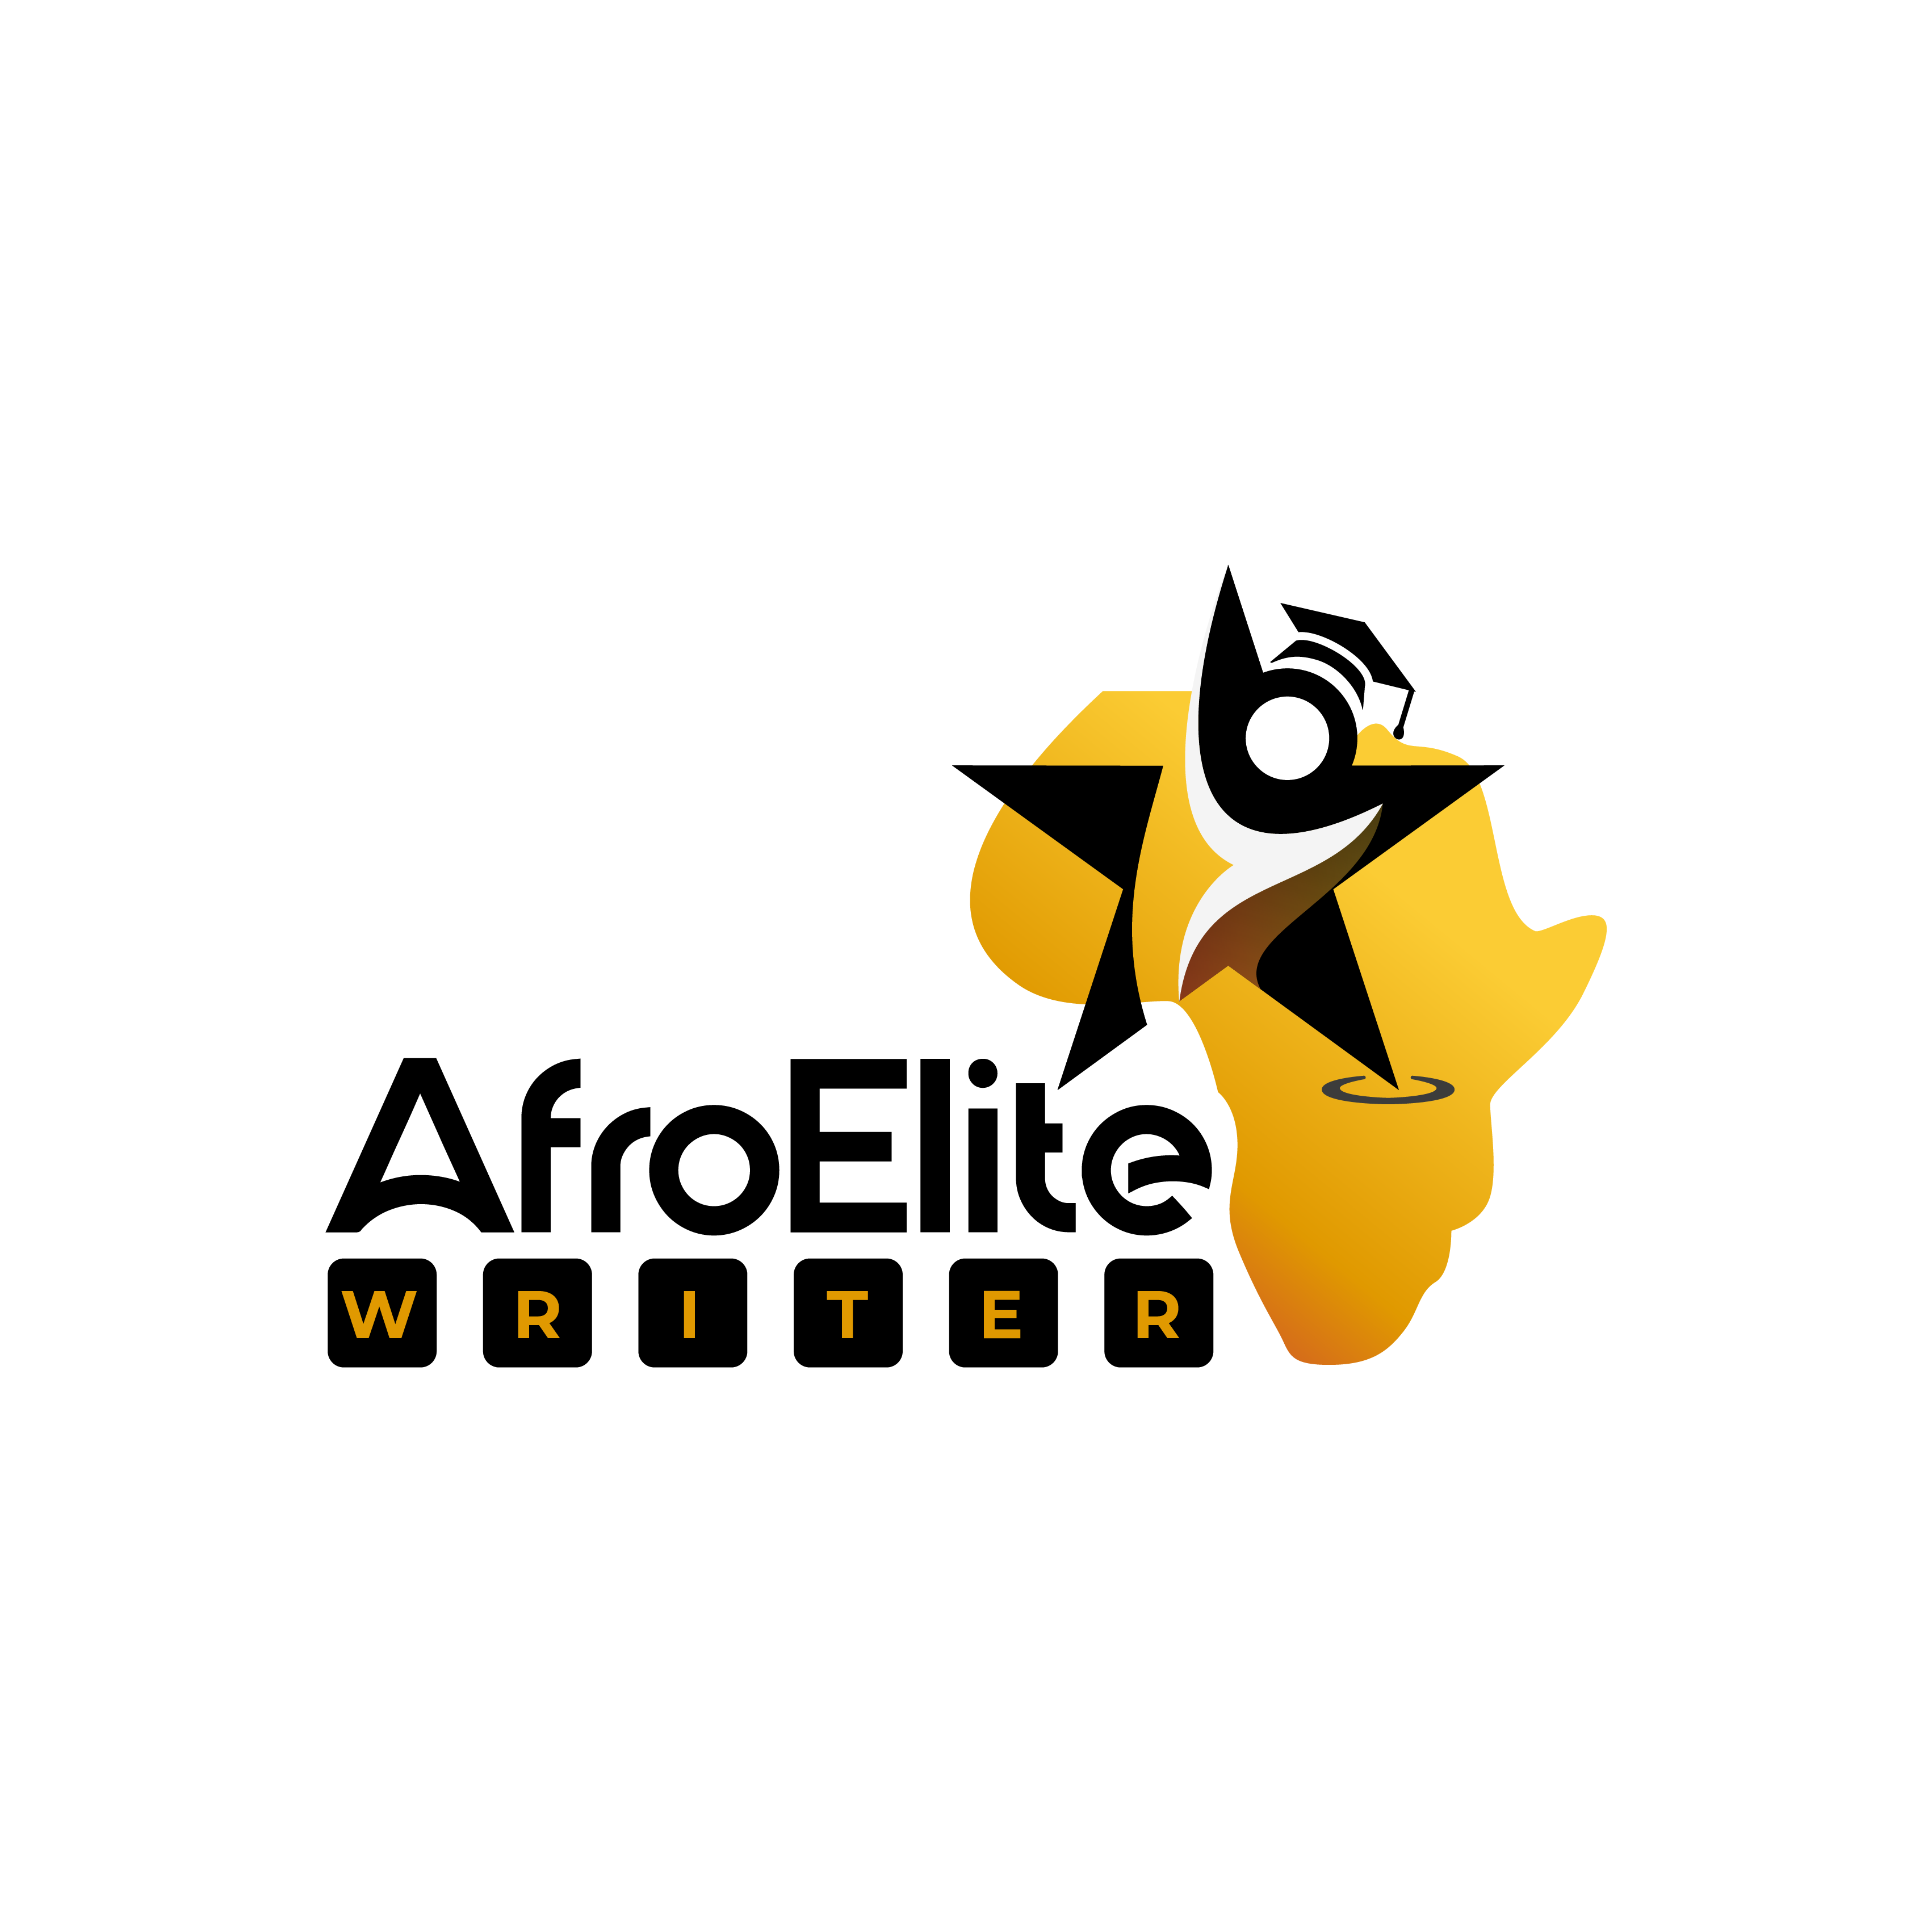 AfroElite Writer